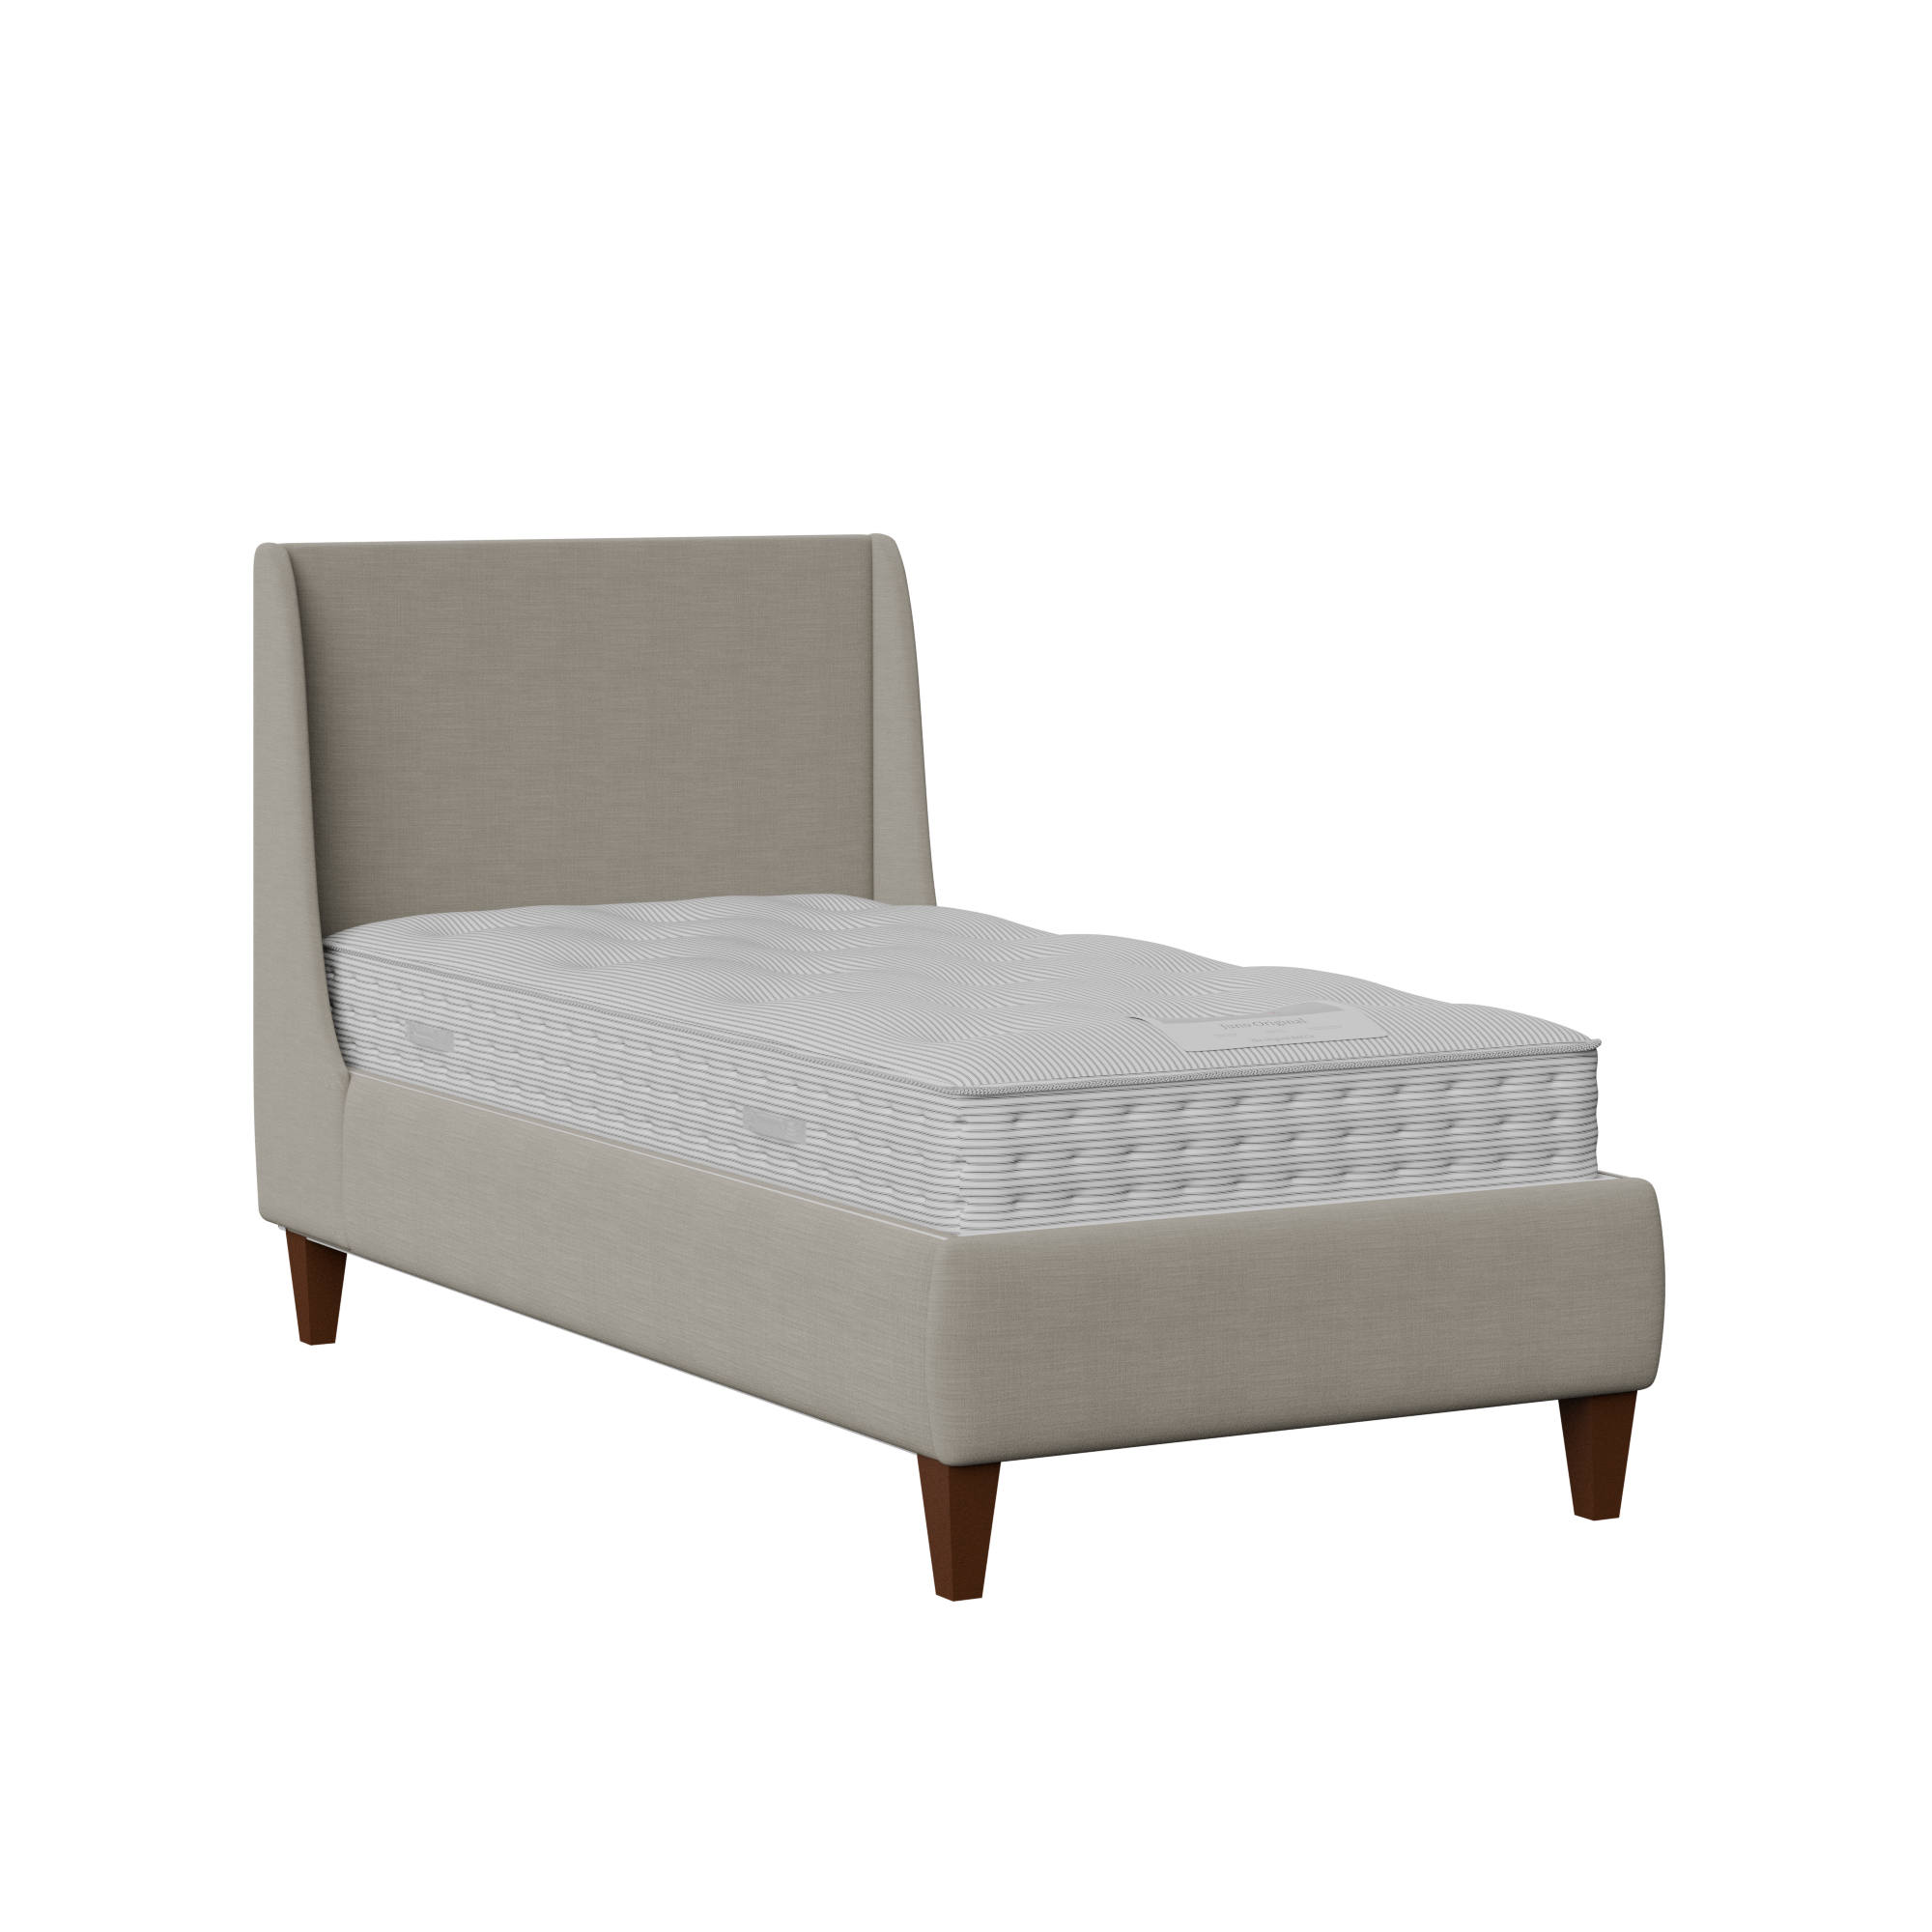 Sunderland upholstered single bed in grey fabric